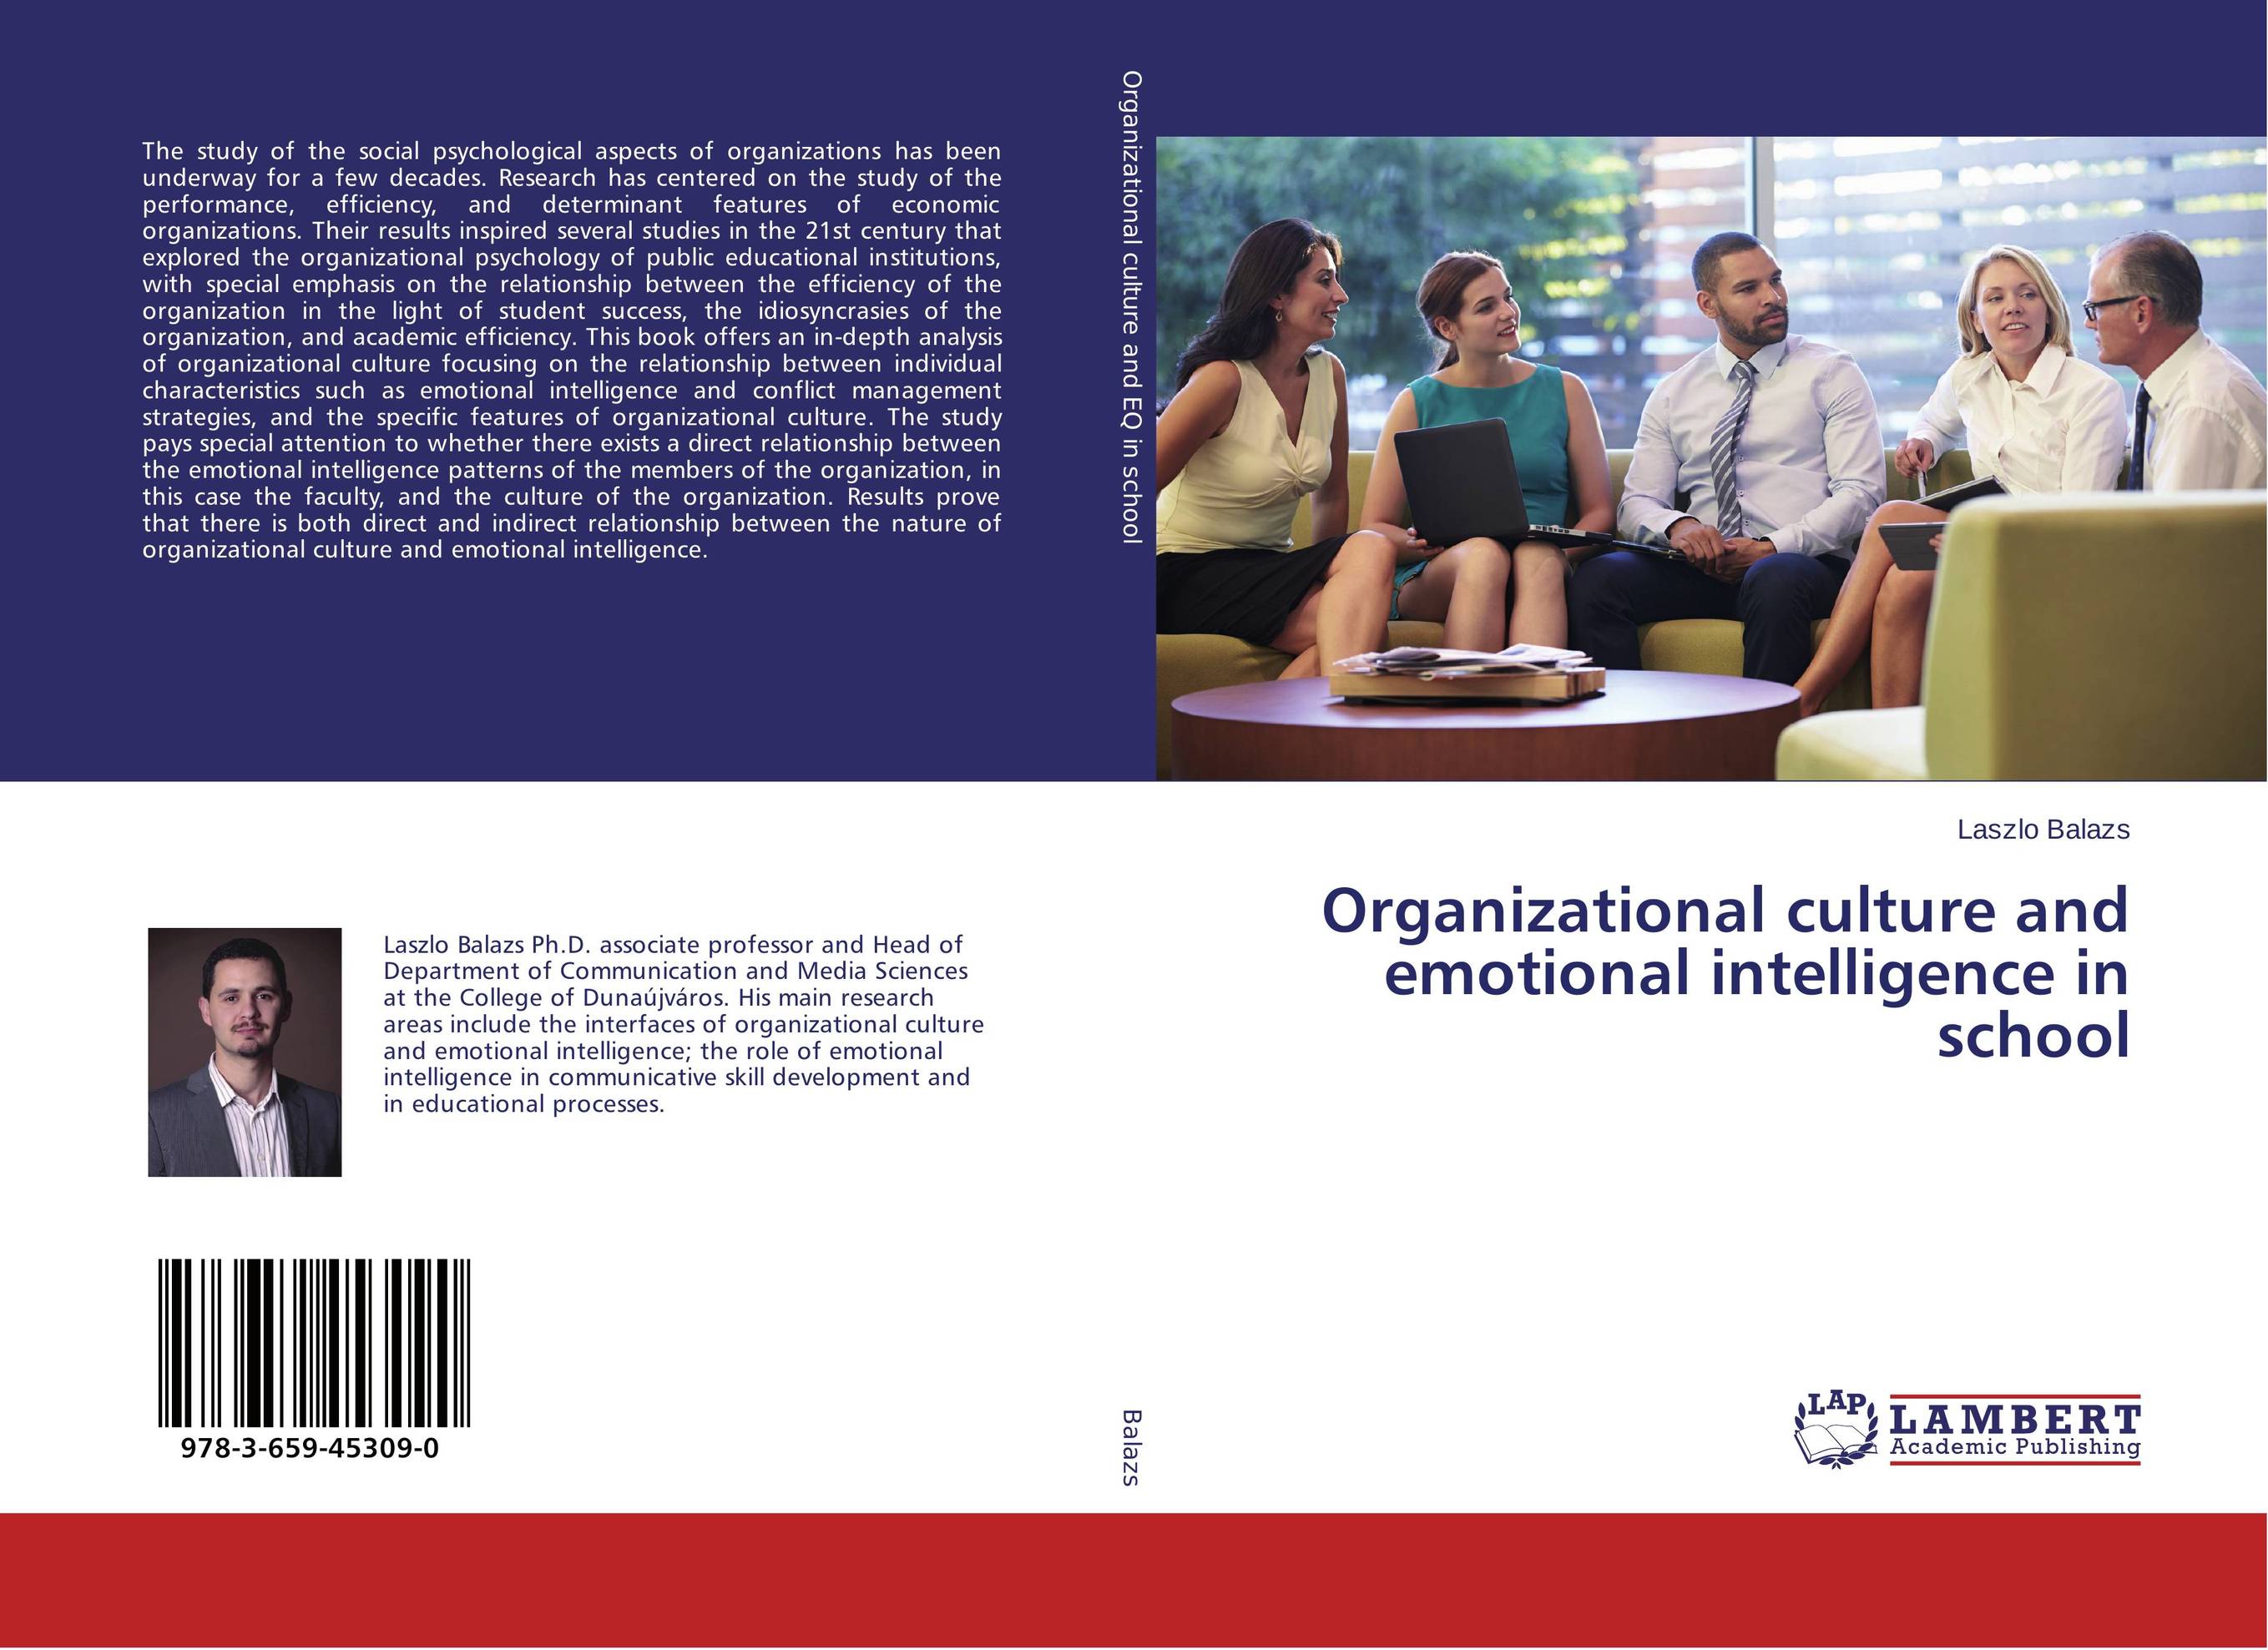 Organizational culture and emotional intelligence in school